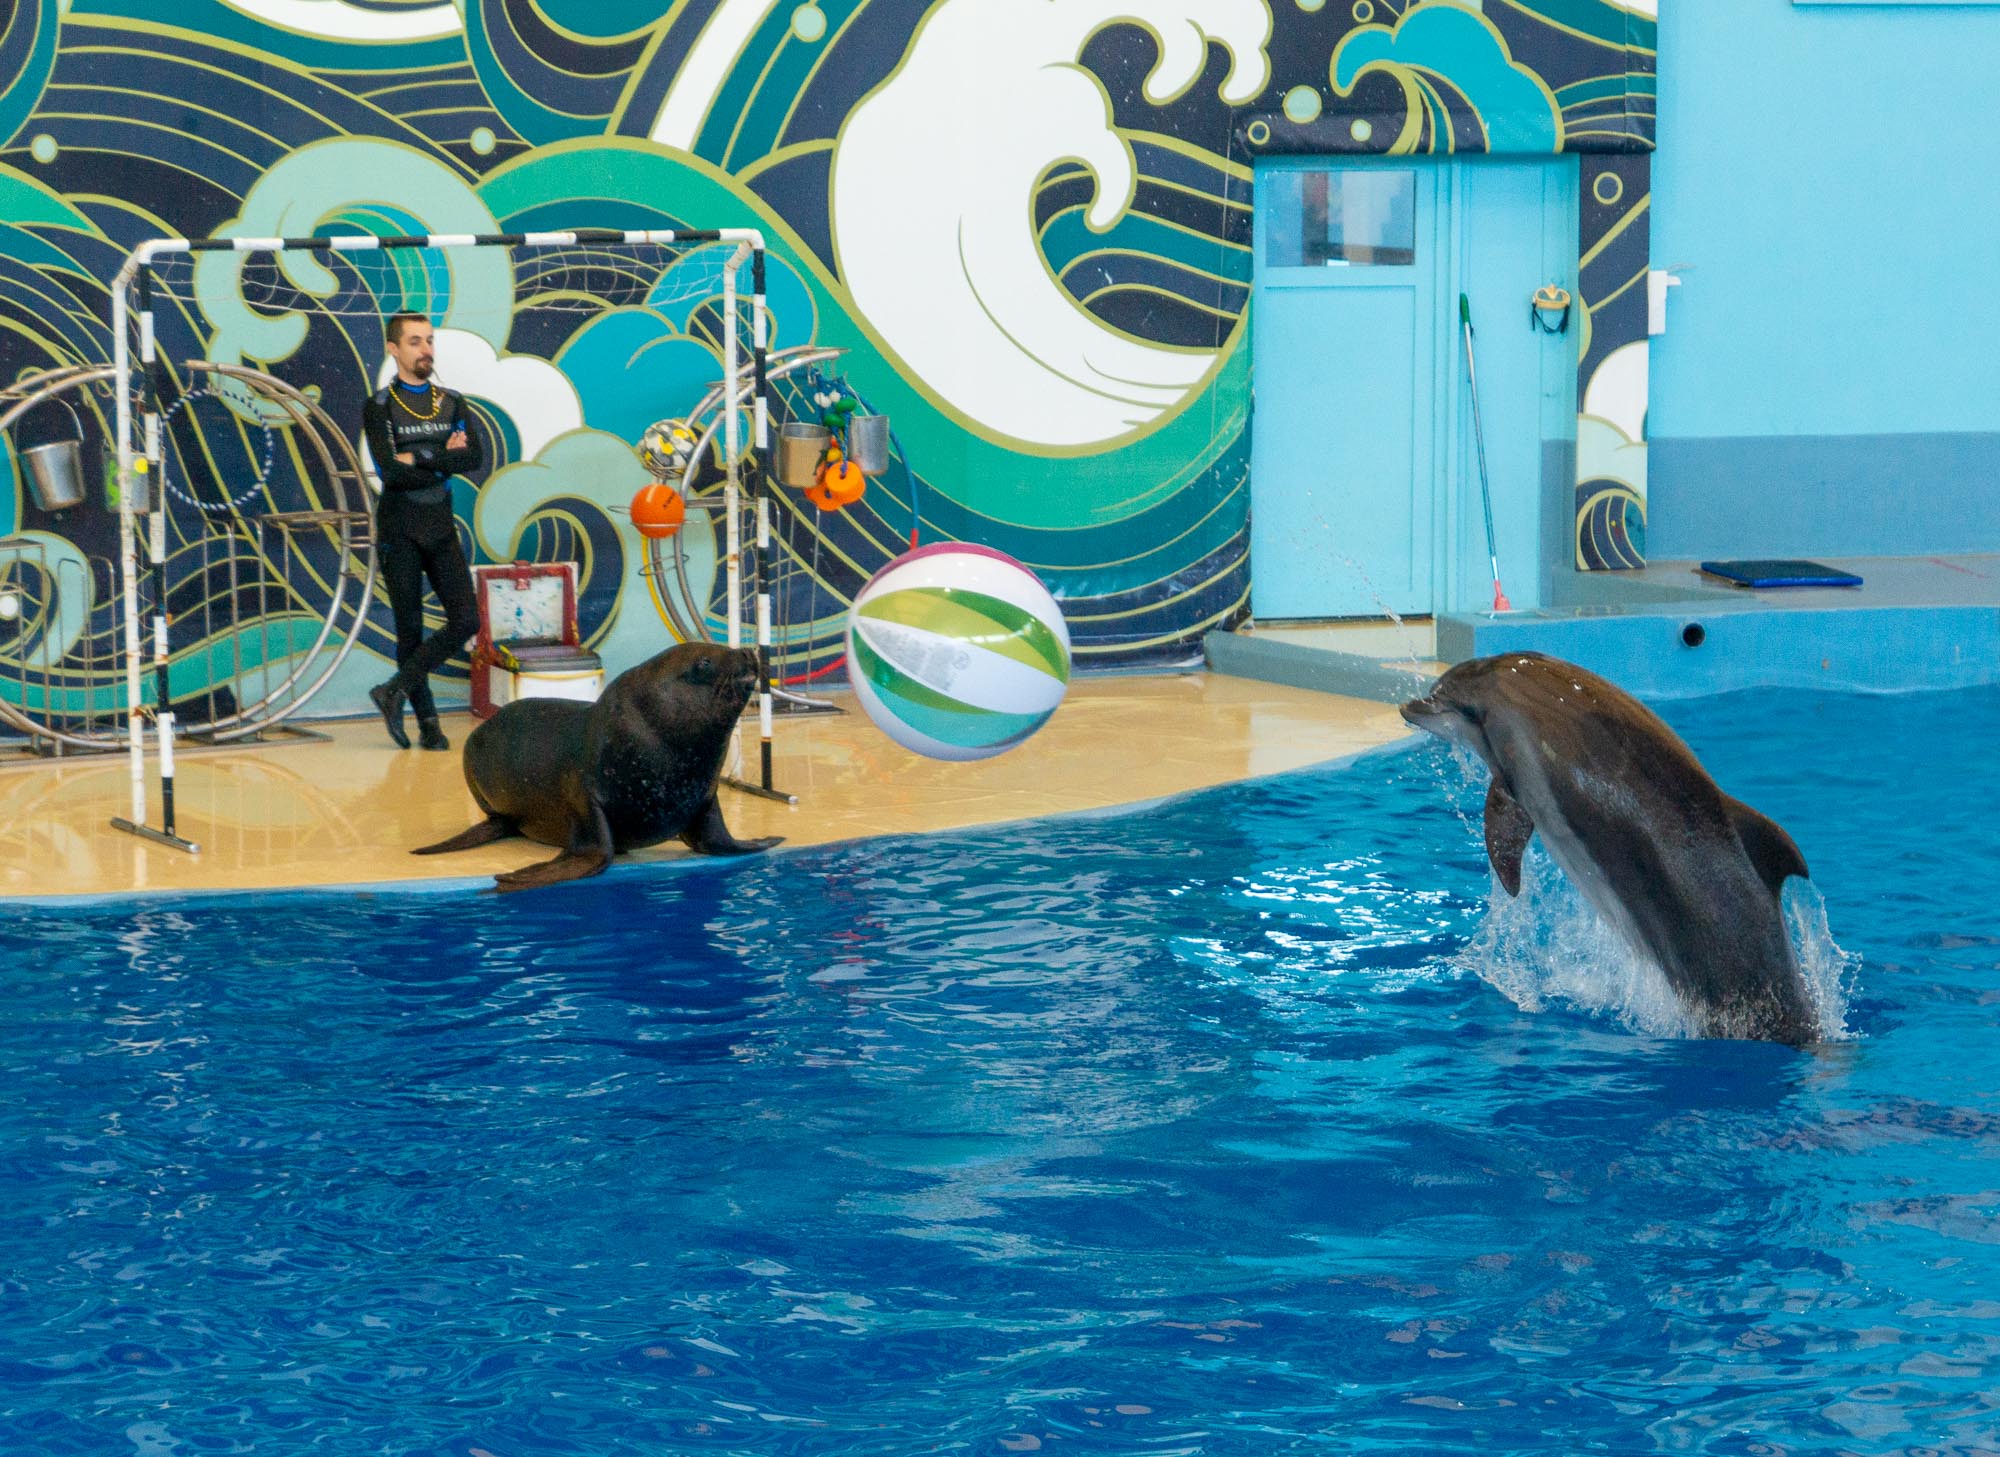 Дельфинарий сочи парк